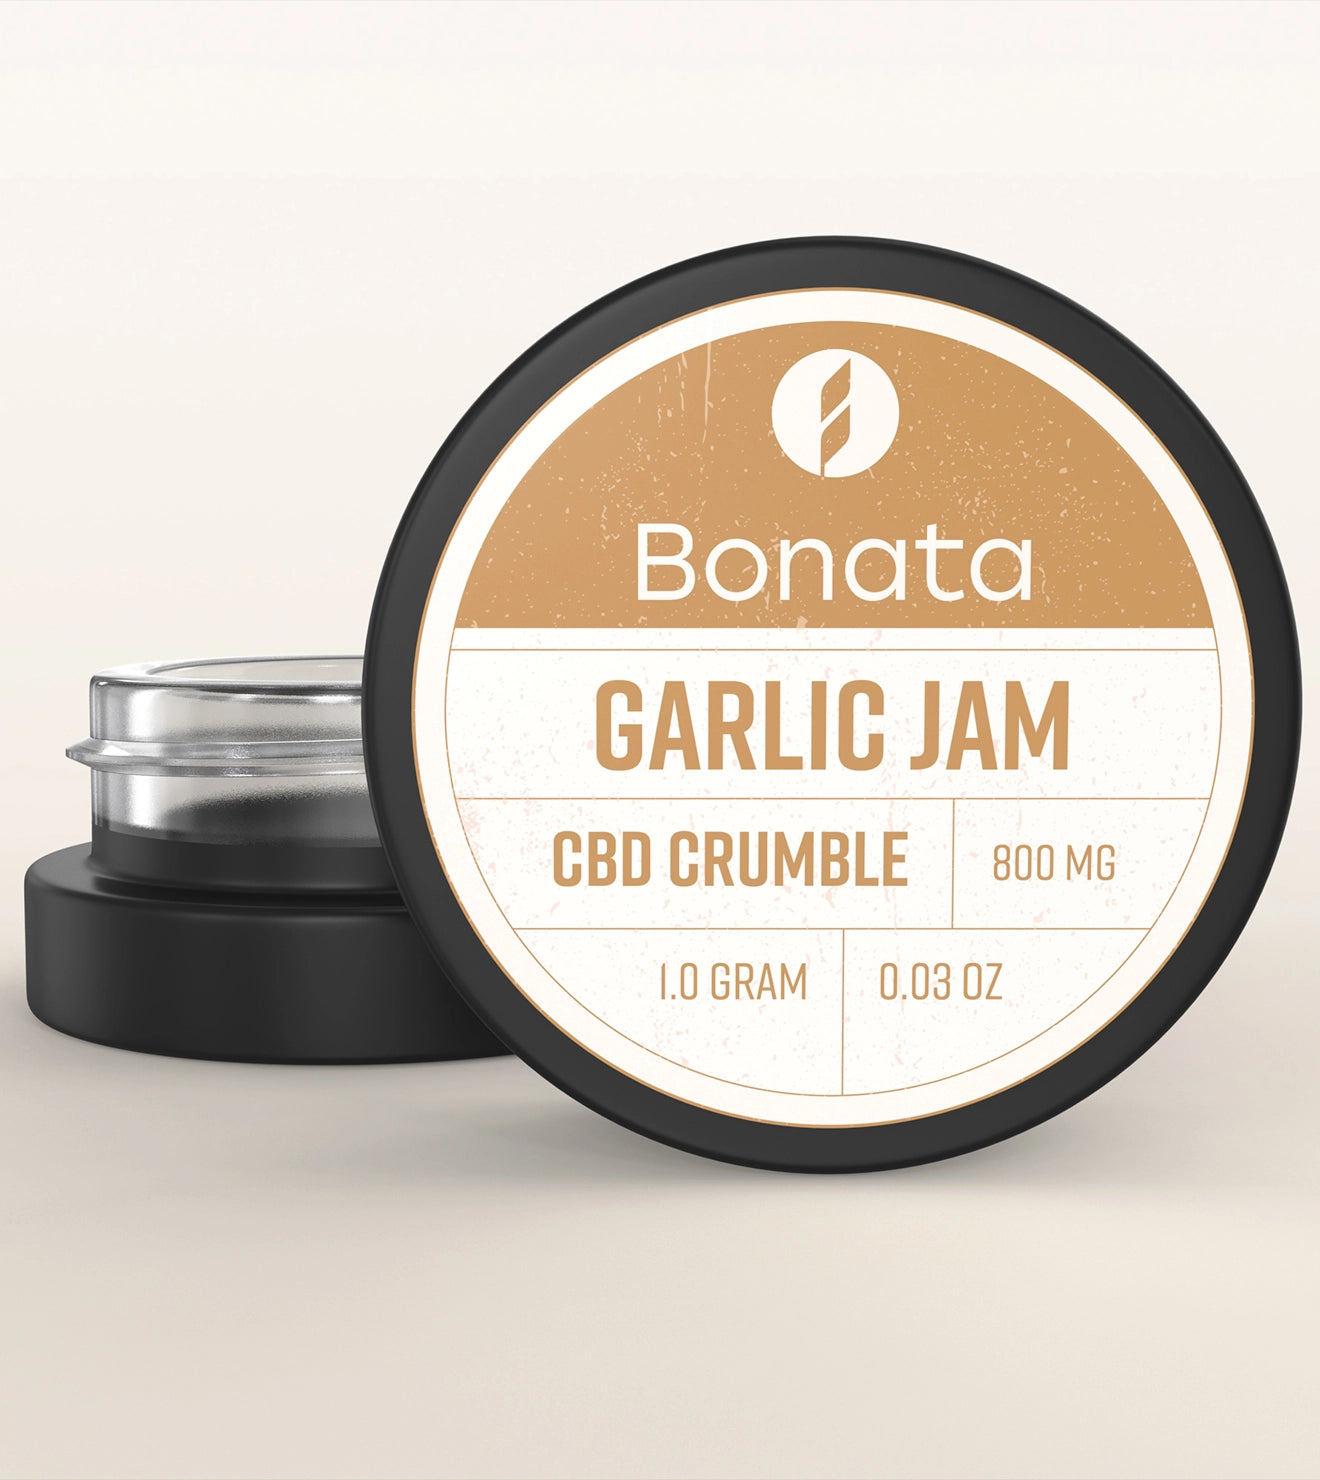 Bonata Garlic Jam CBD Crumble Concentrate for dabbing